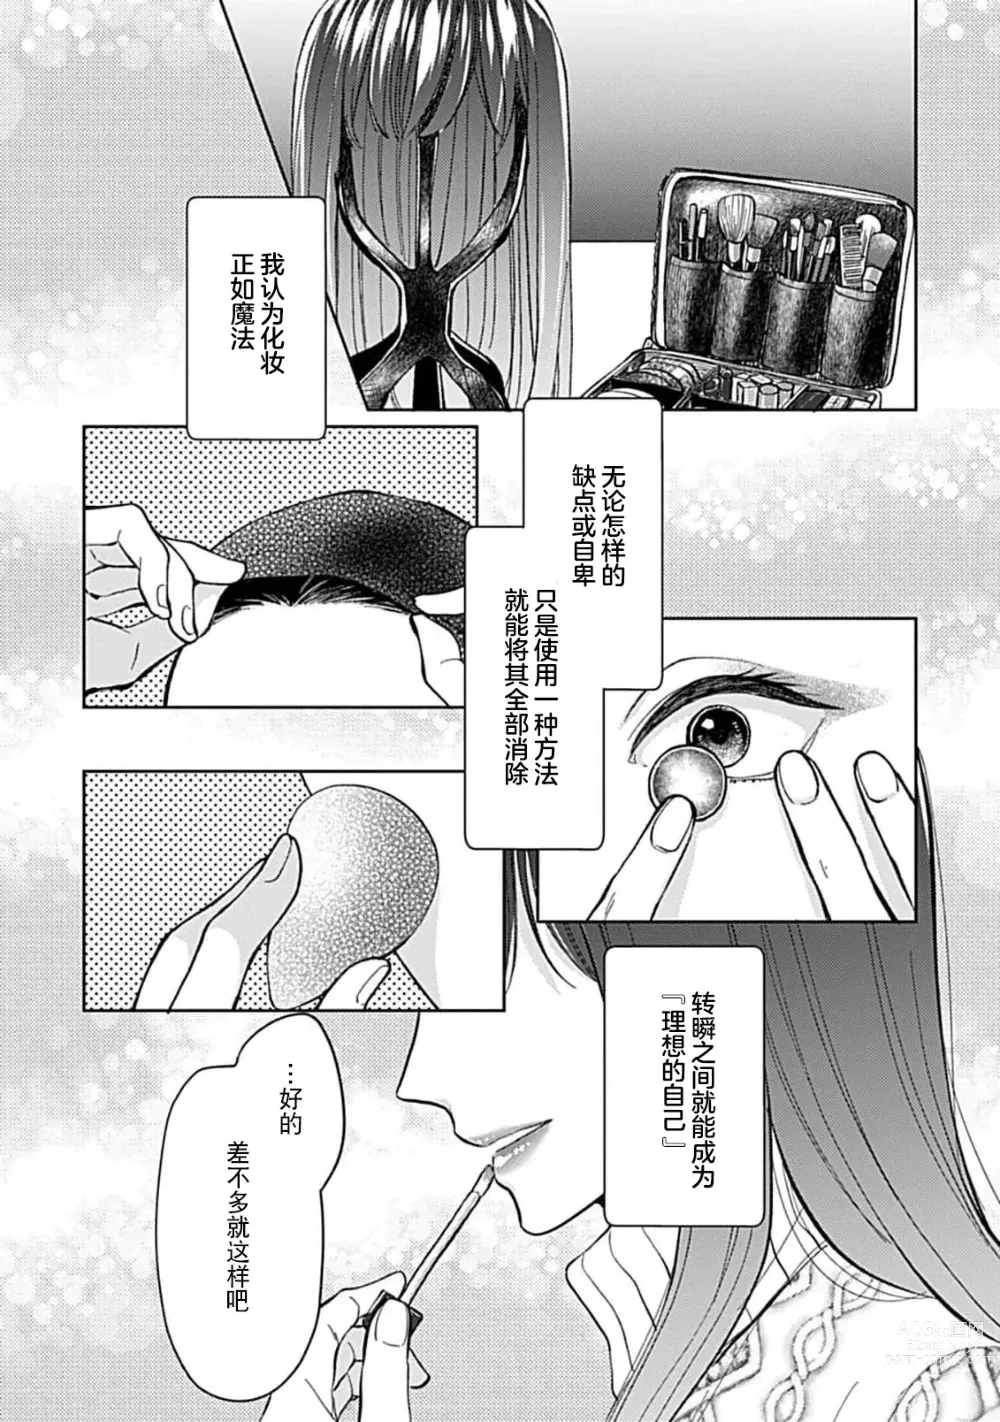 Page 4 of manga 恋情与秘密难以映照 Ch. 1-2